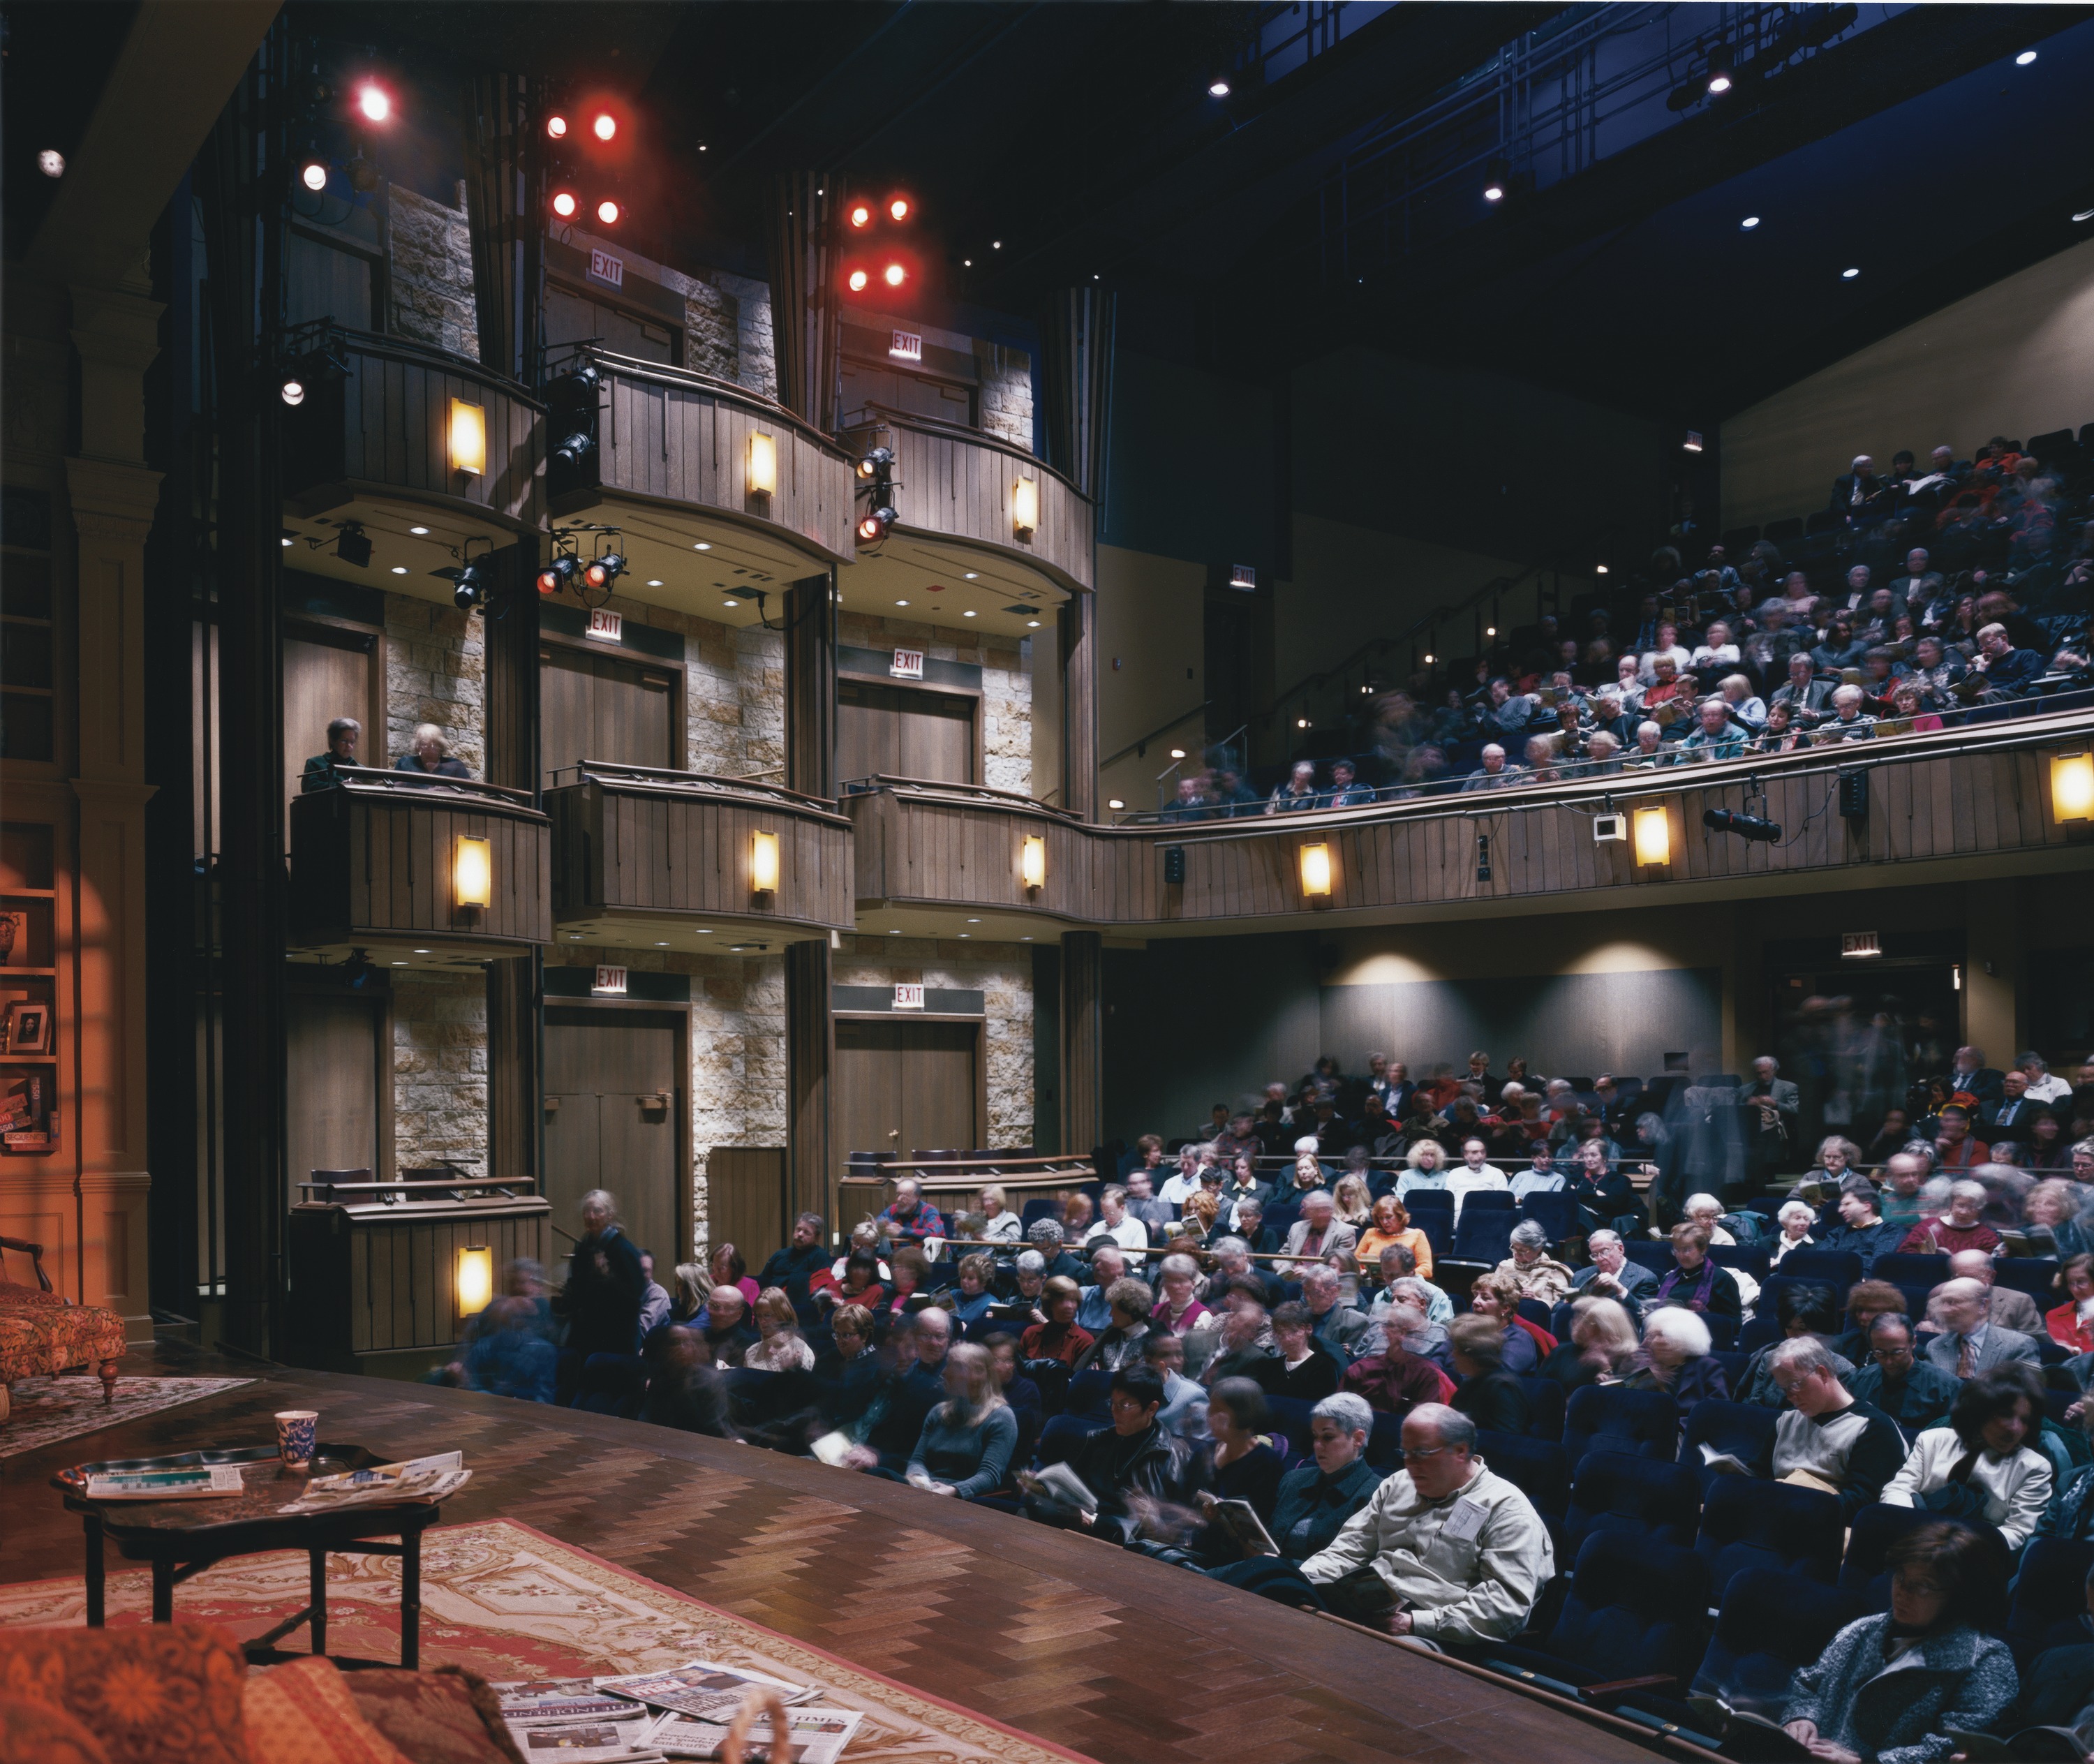 Goodman Theatre - Theatre